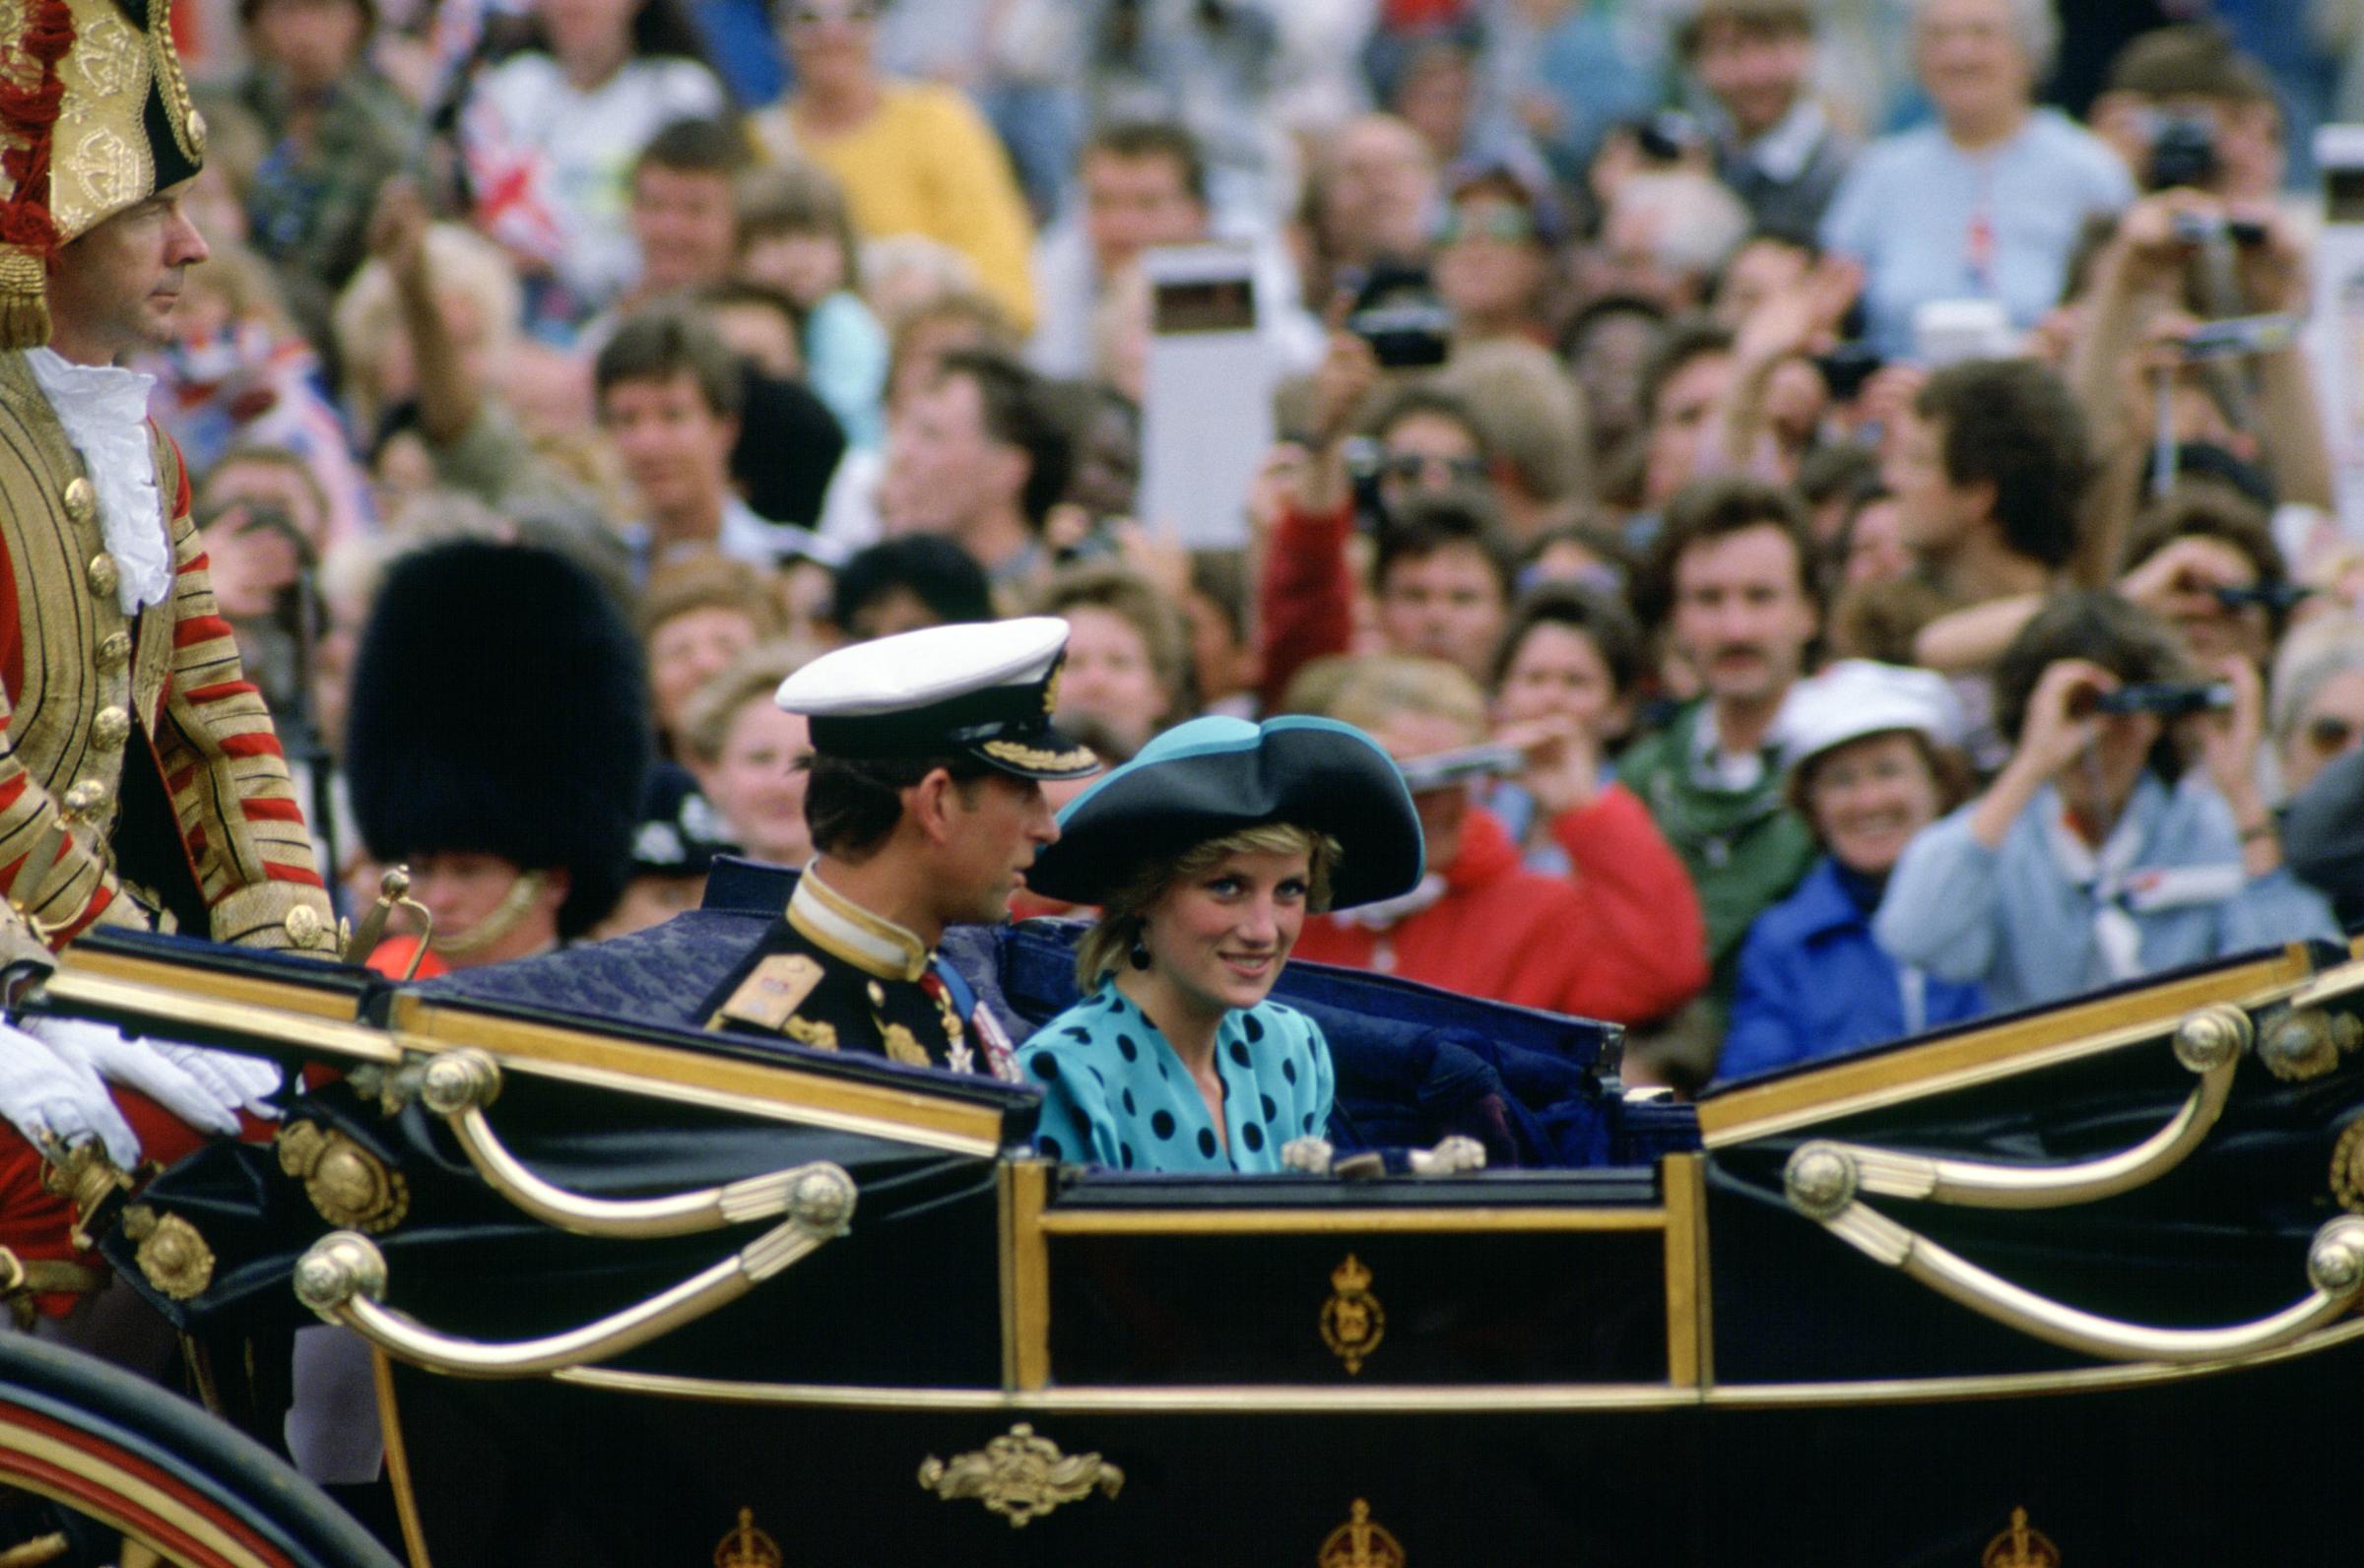 Prince Charles, Prince of Wales and Diana, Princess of Wales